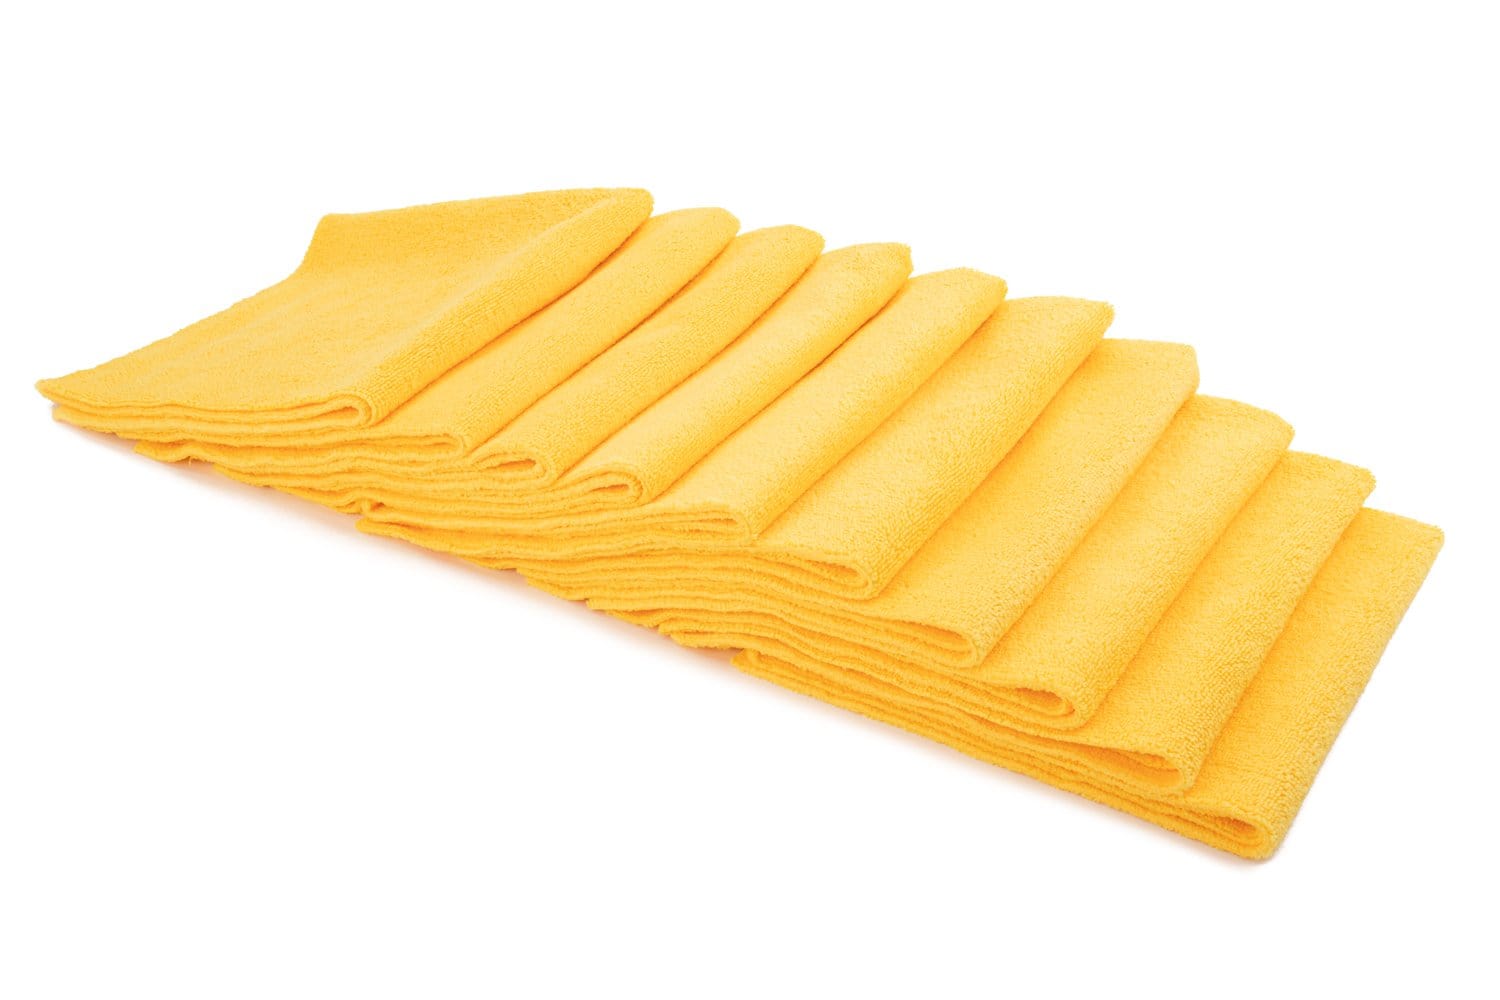 Autofiber® AMPHIBIAN - Microfiber Drying Towel (20 in. x 30 in., 1100g